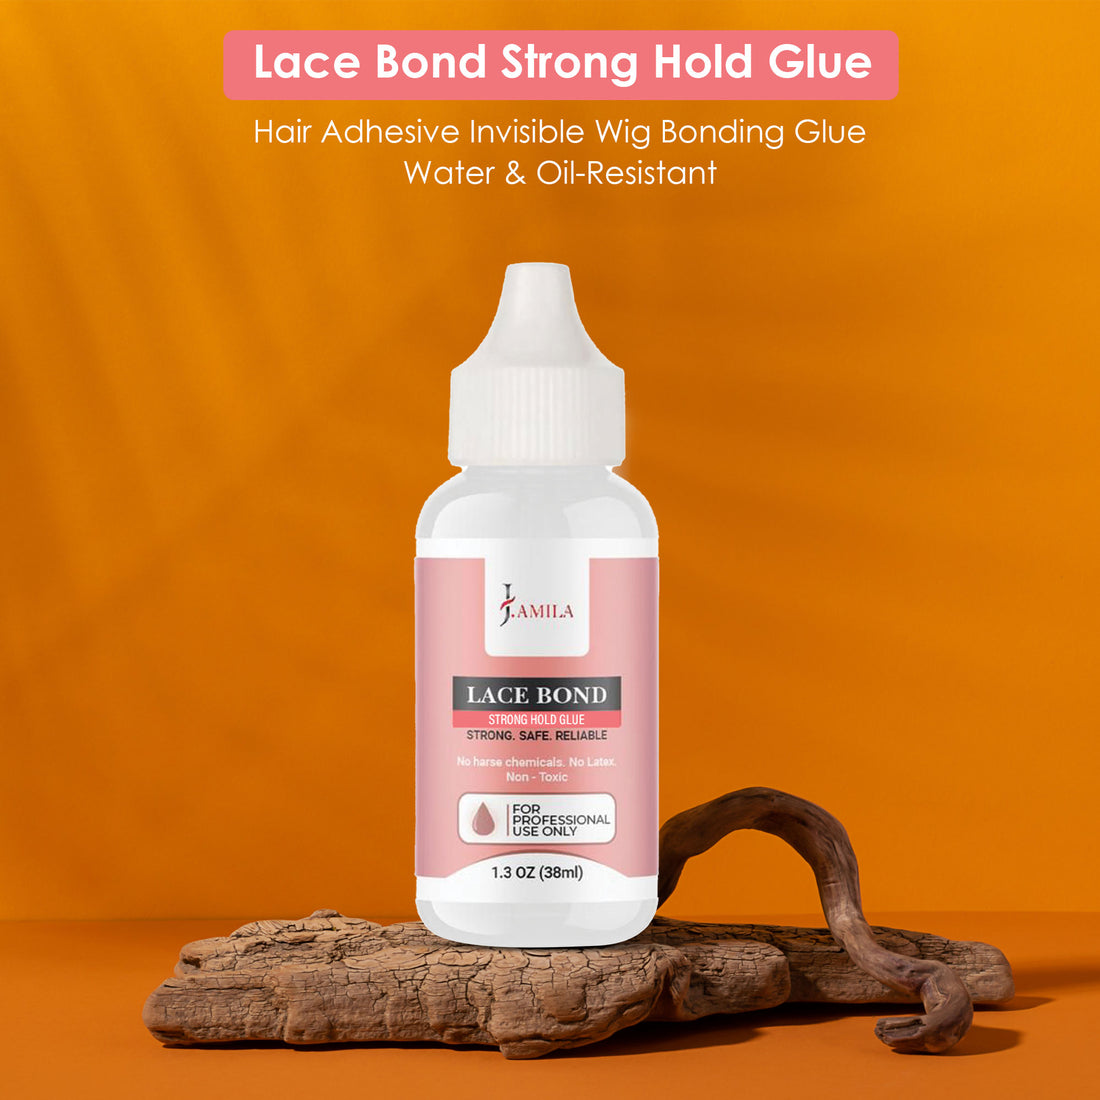 J. AMILA Lace Bond Strong Hold Glue (1.3oz)